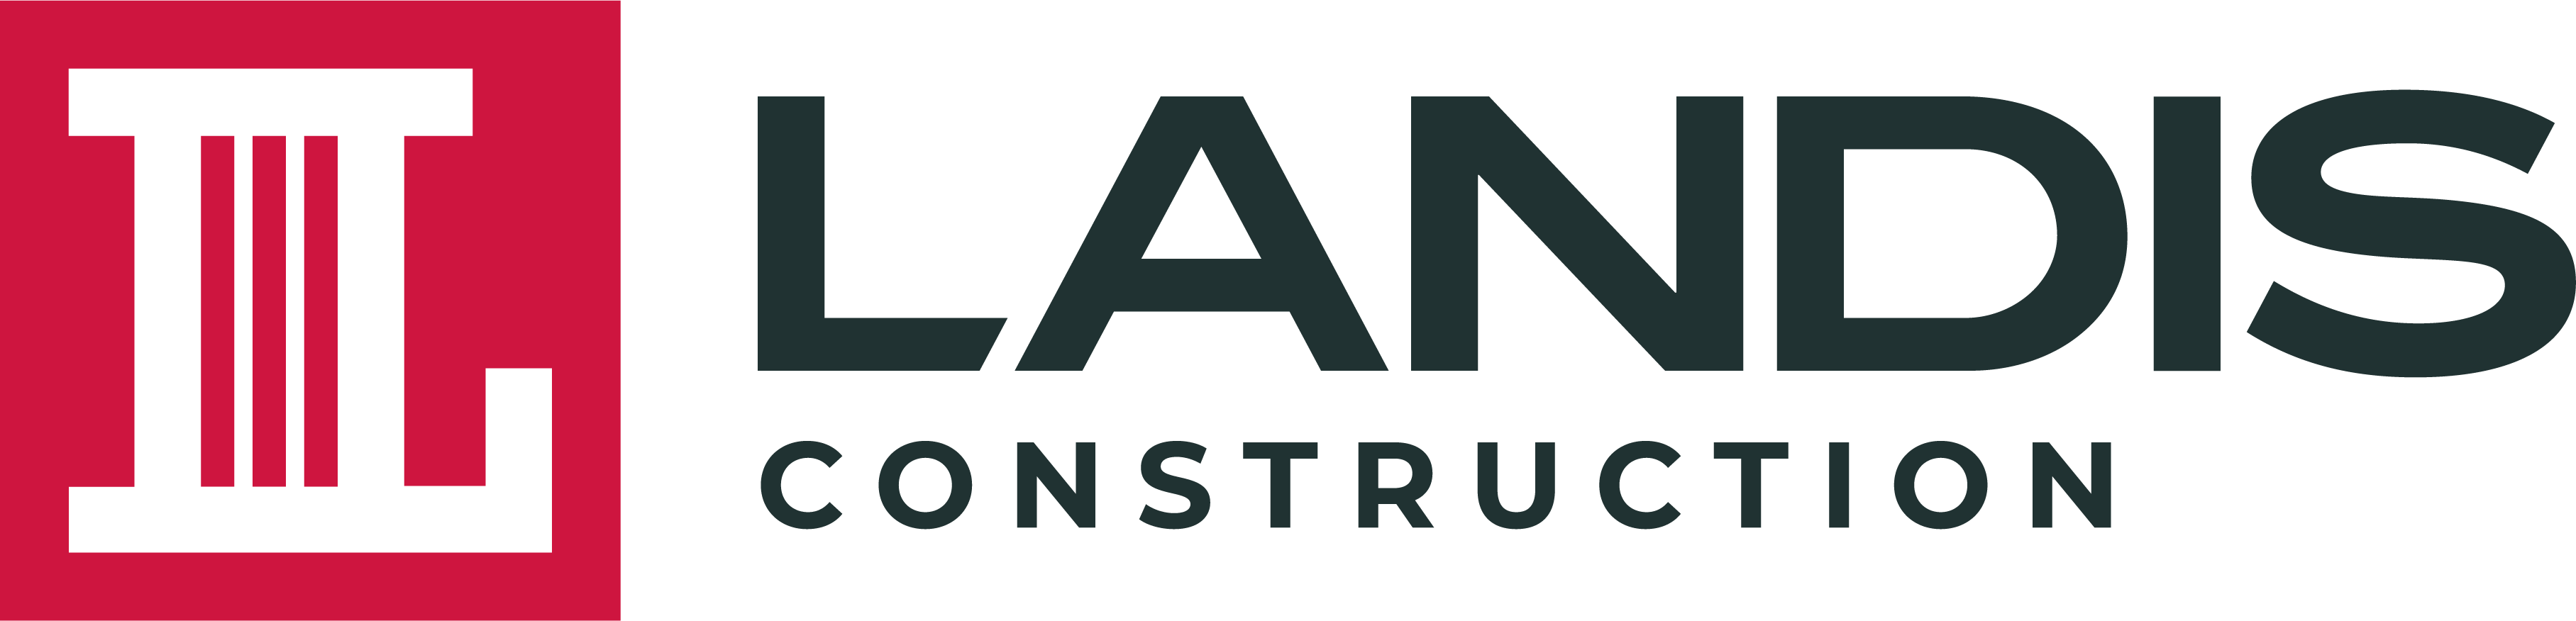 Landis Construction logo